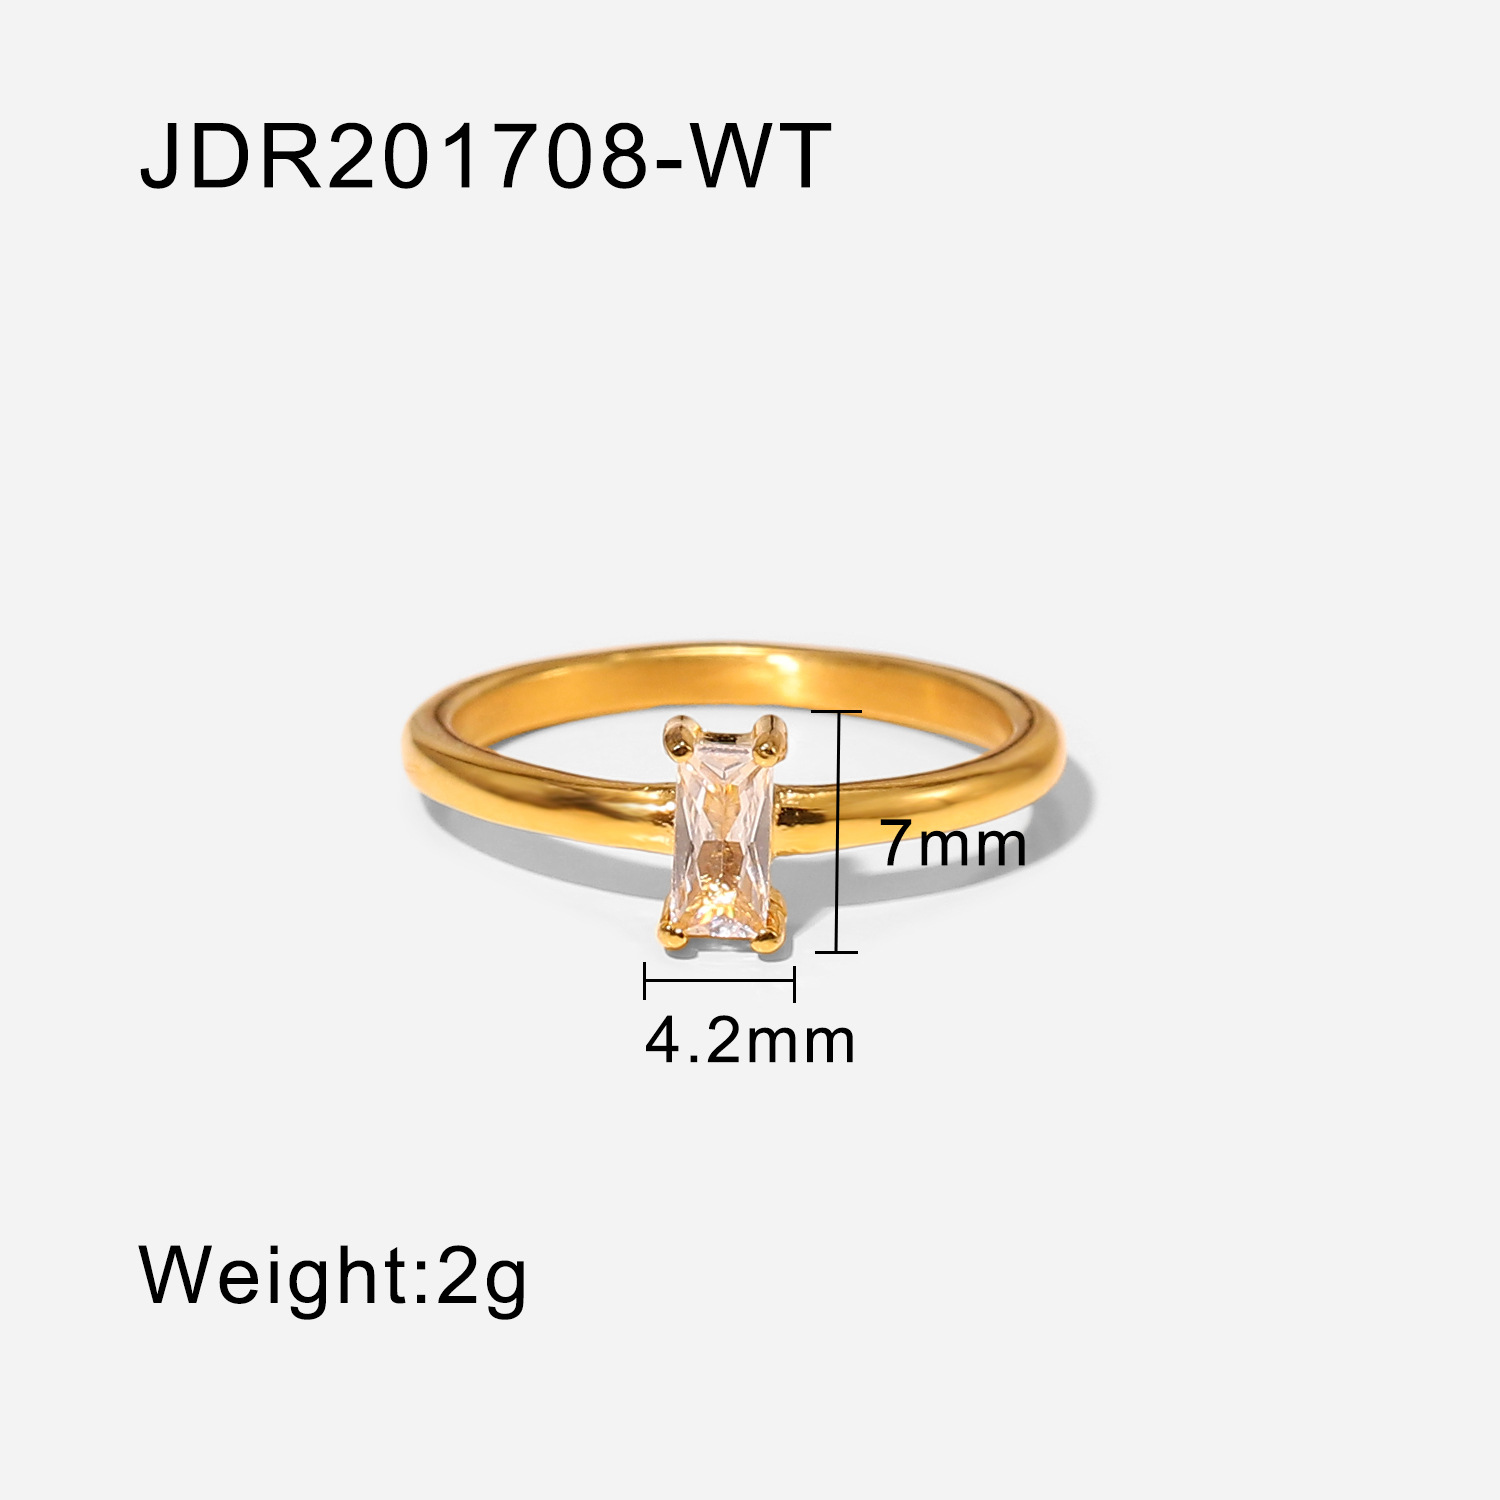 2:JDR201708-WT